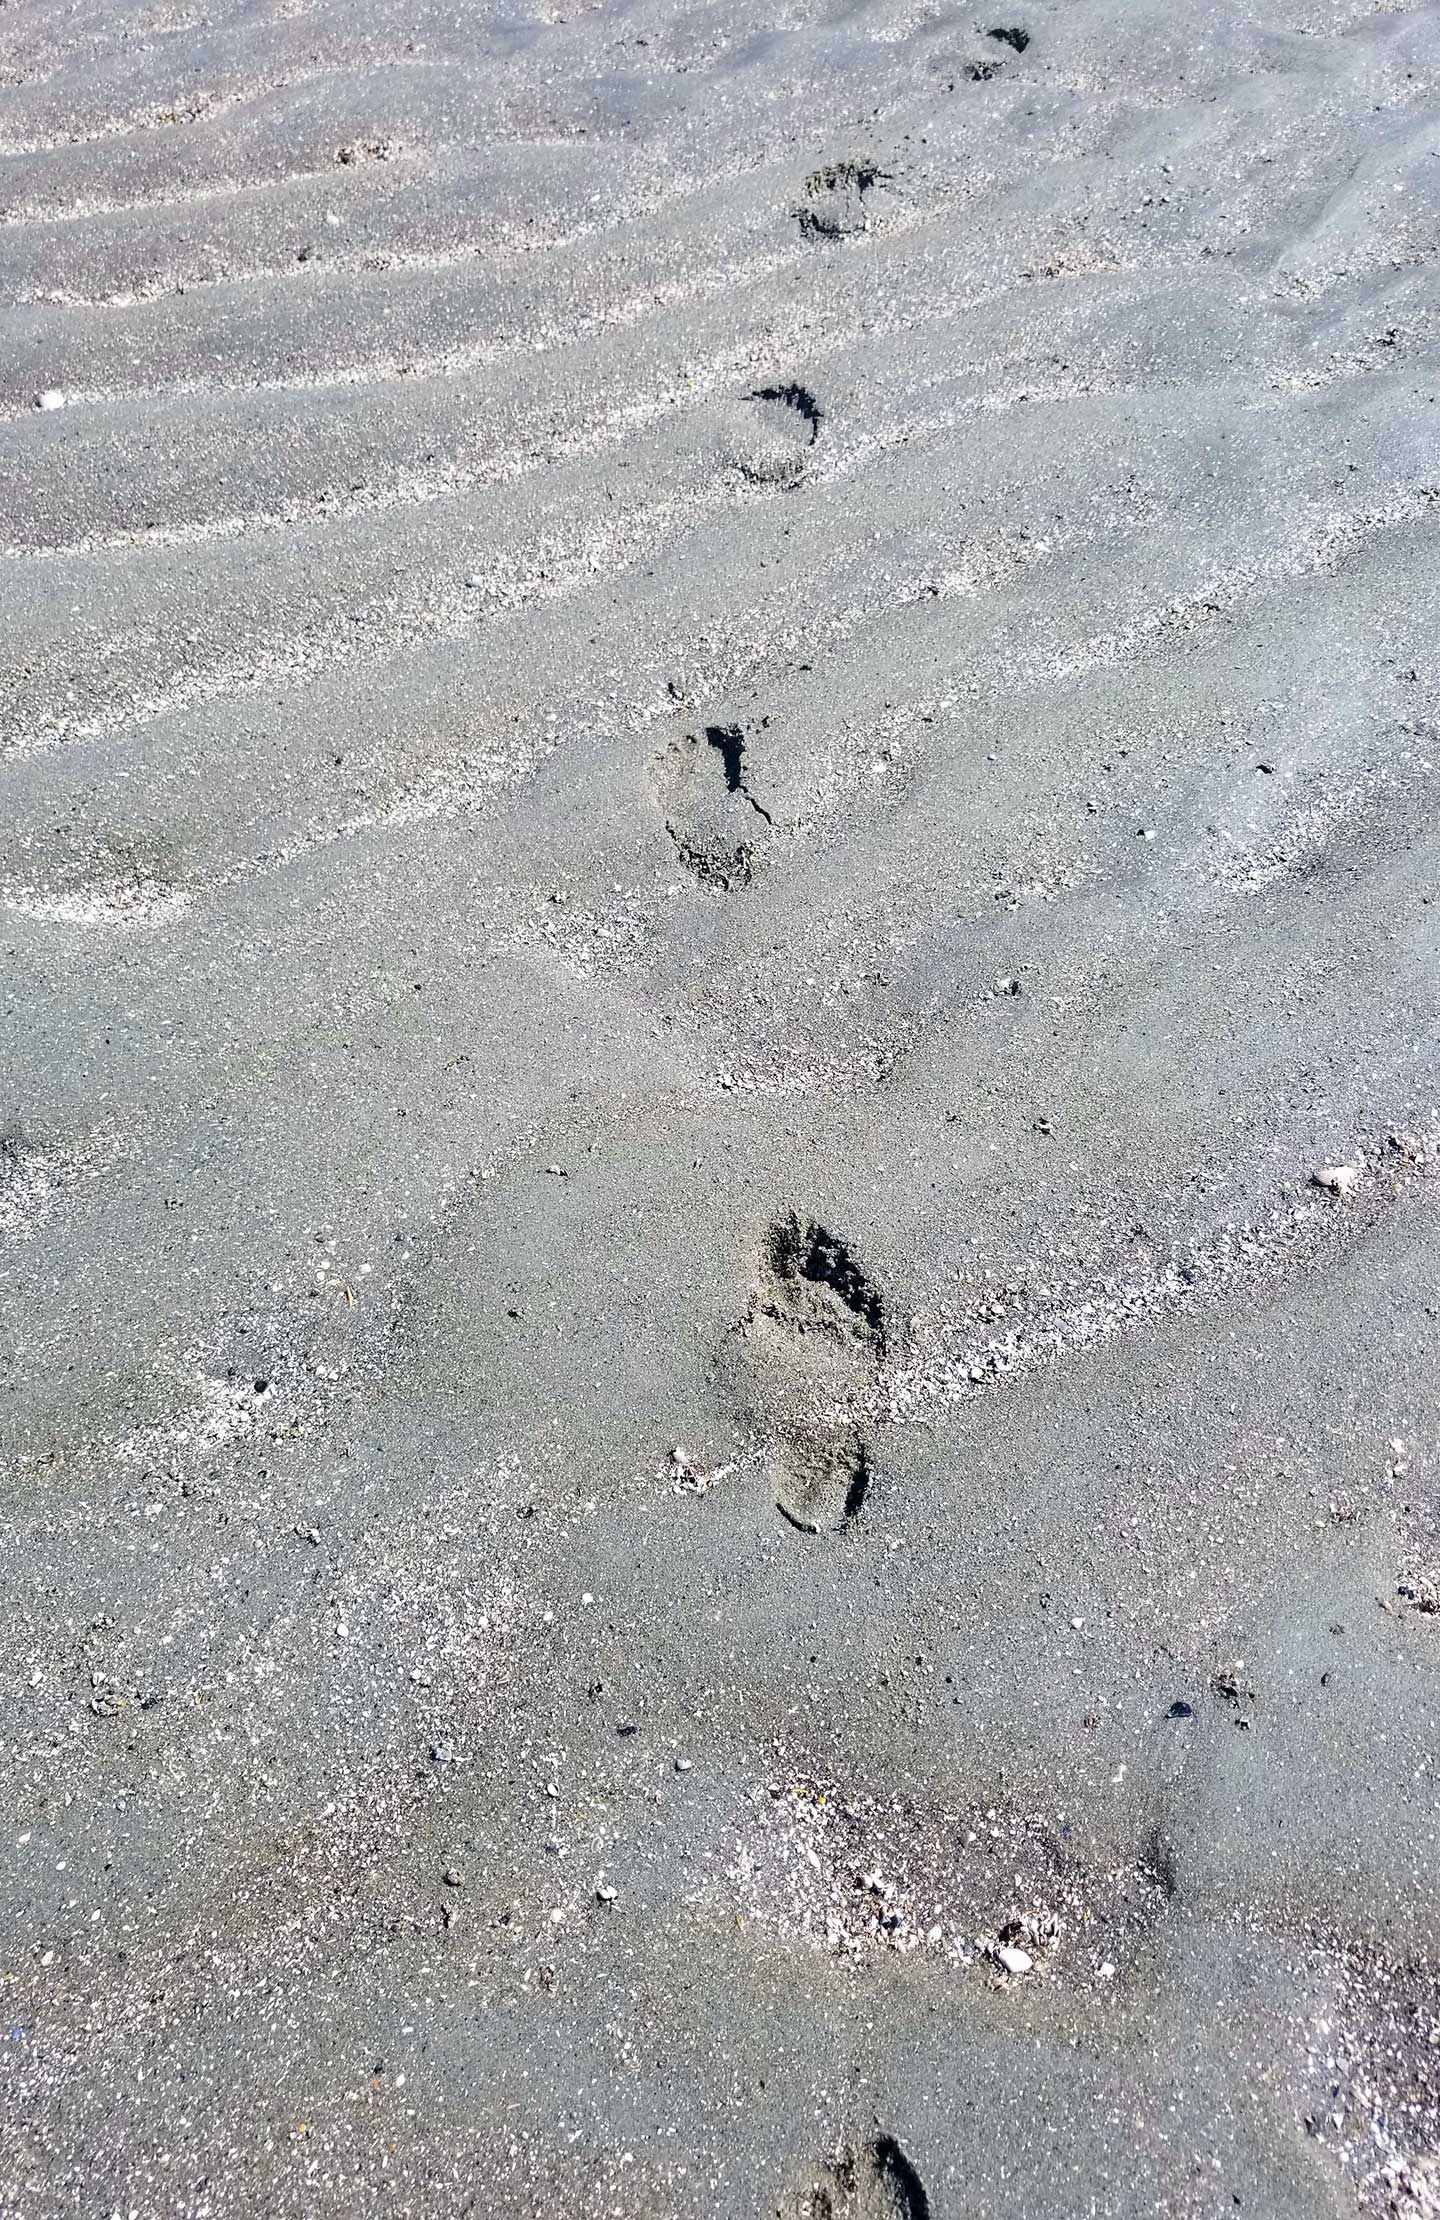 Footprints in the sand at Vanishing Island, Hilton Head Island, SC